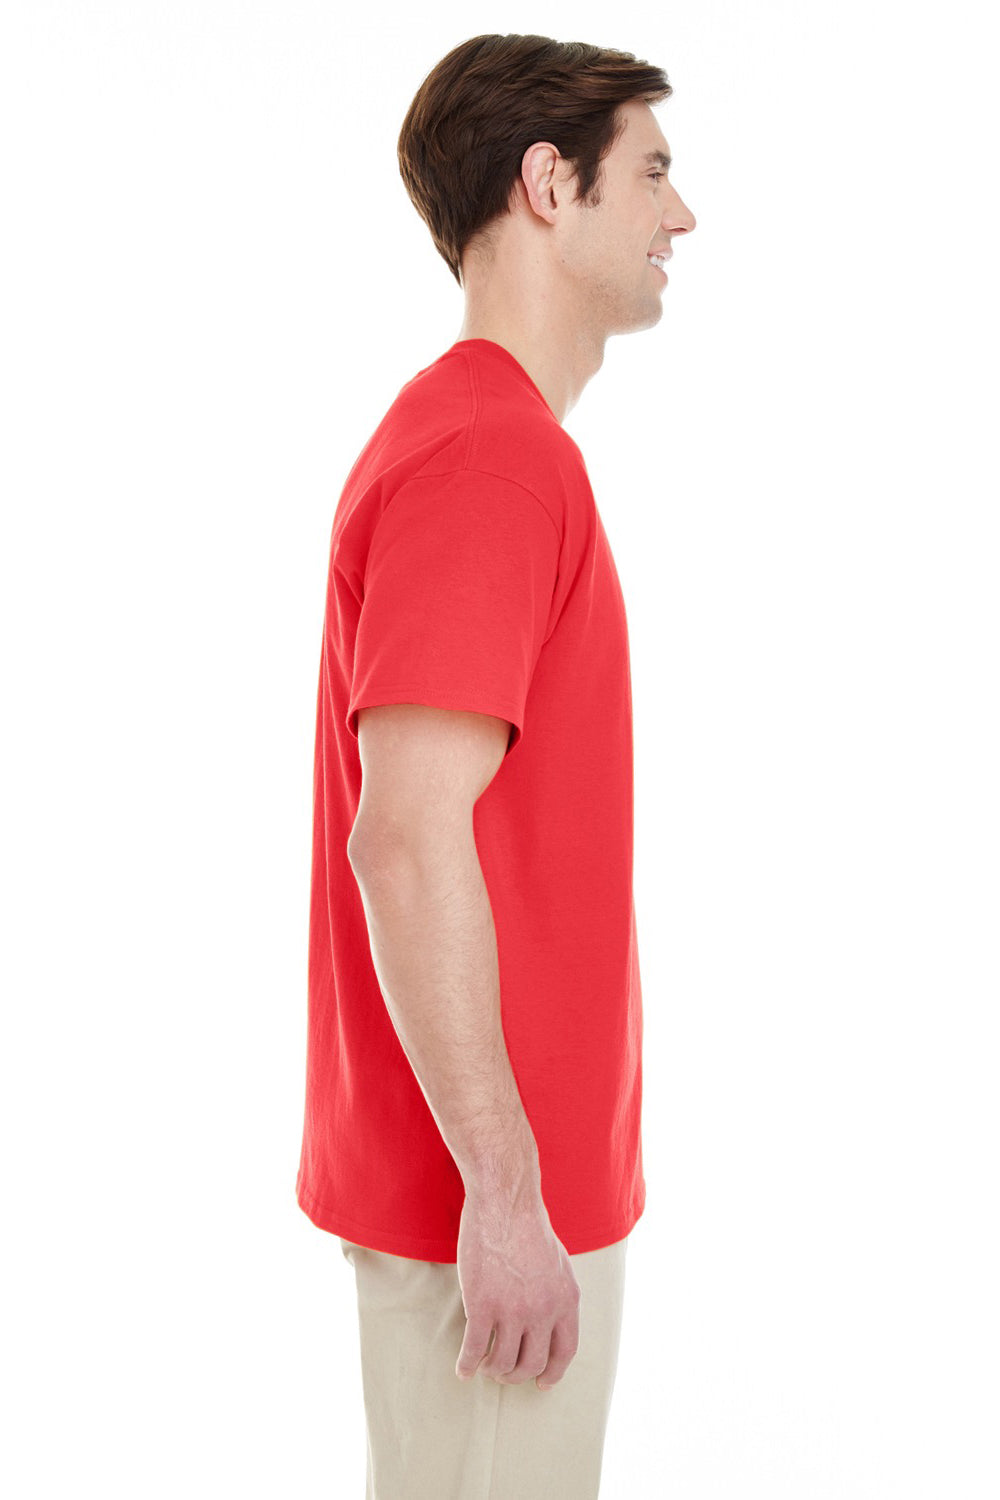 Gildan G530 Mens Short Sleeve Crewneck T-Shirt w/ Pocket Red Side